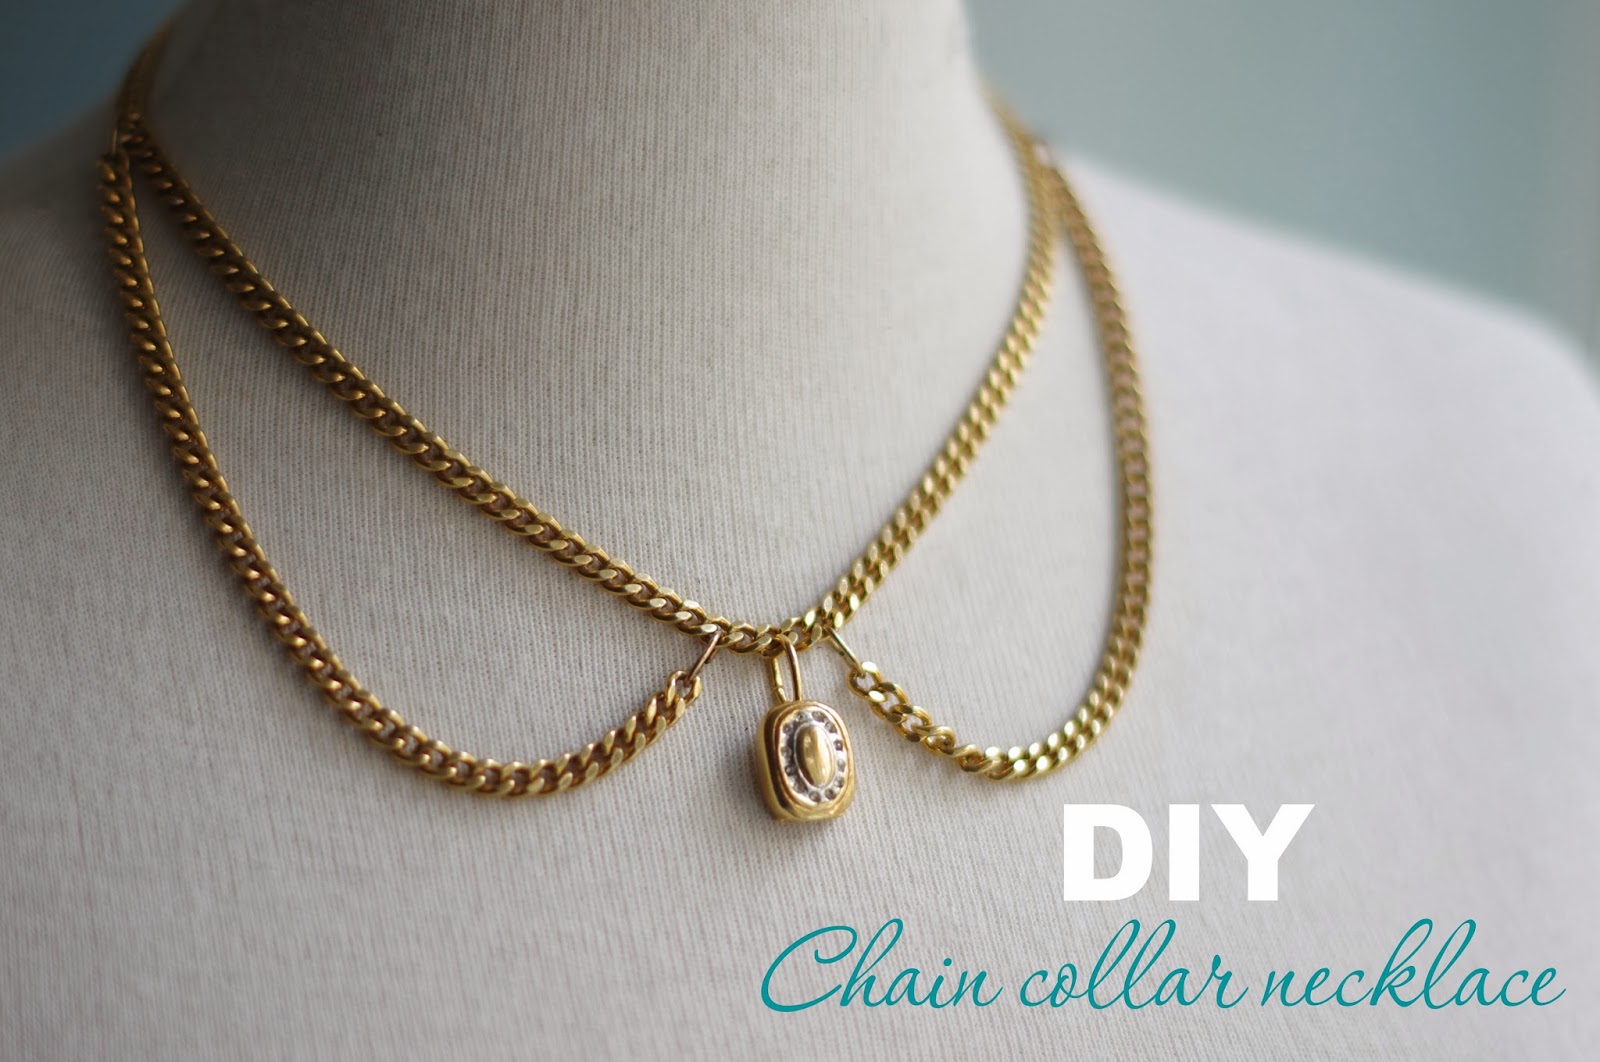 Diy chain collar necklace